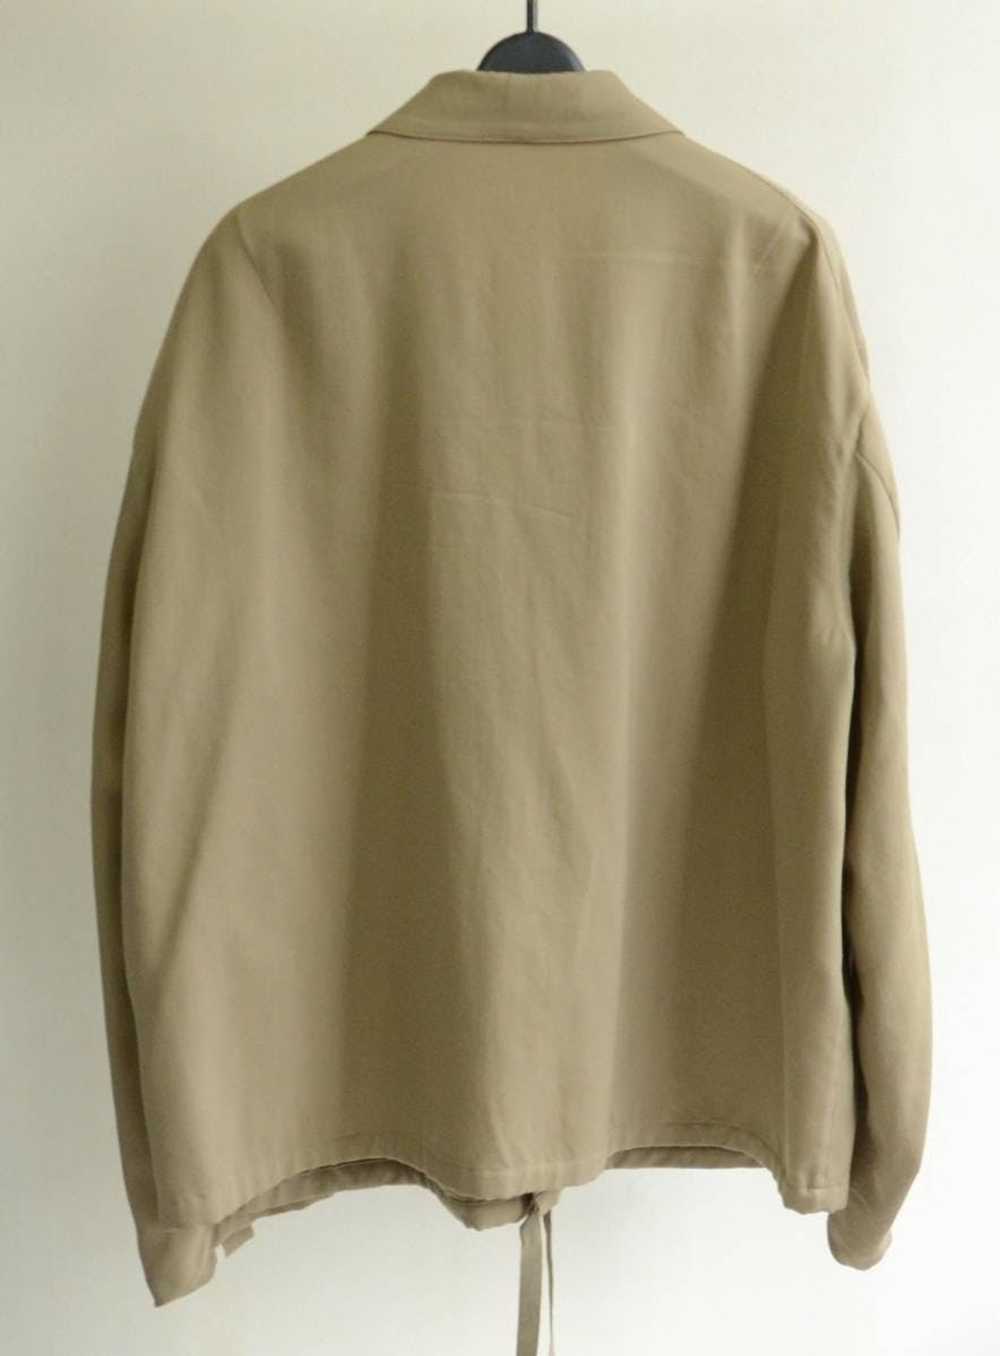 Uru beige blouson jacket wool & rayon size 3 - image 3